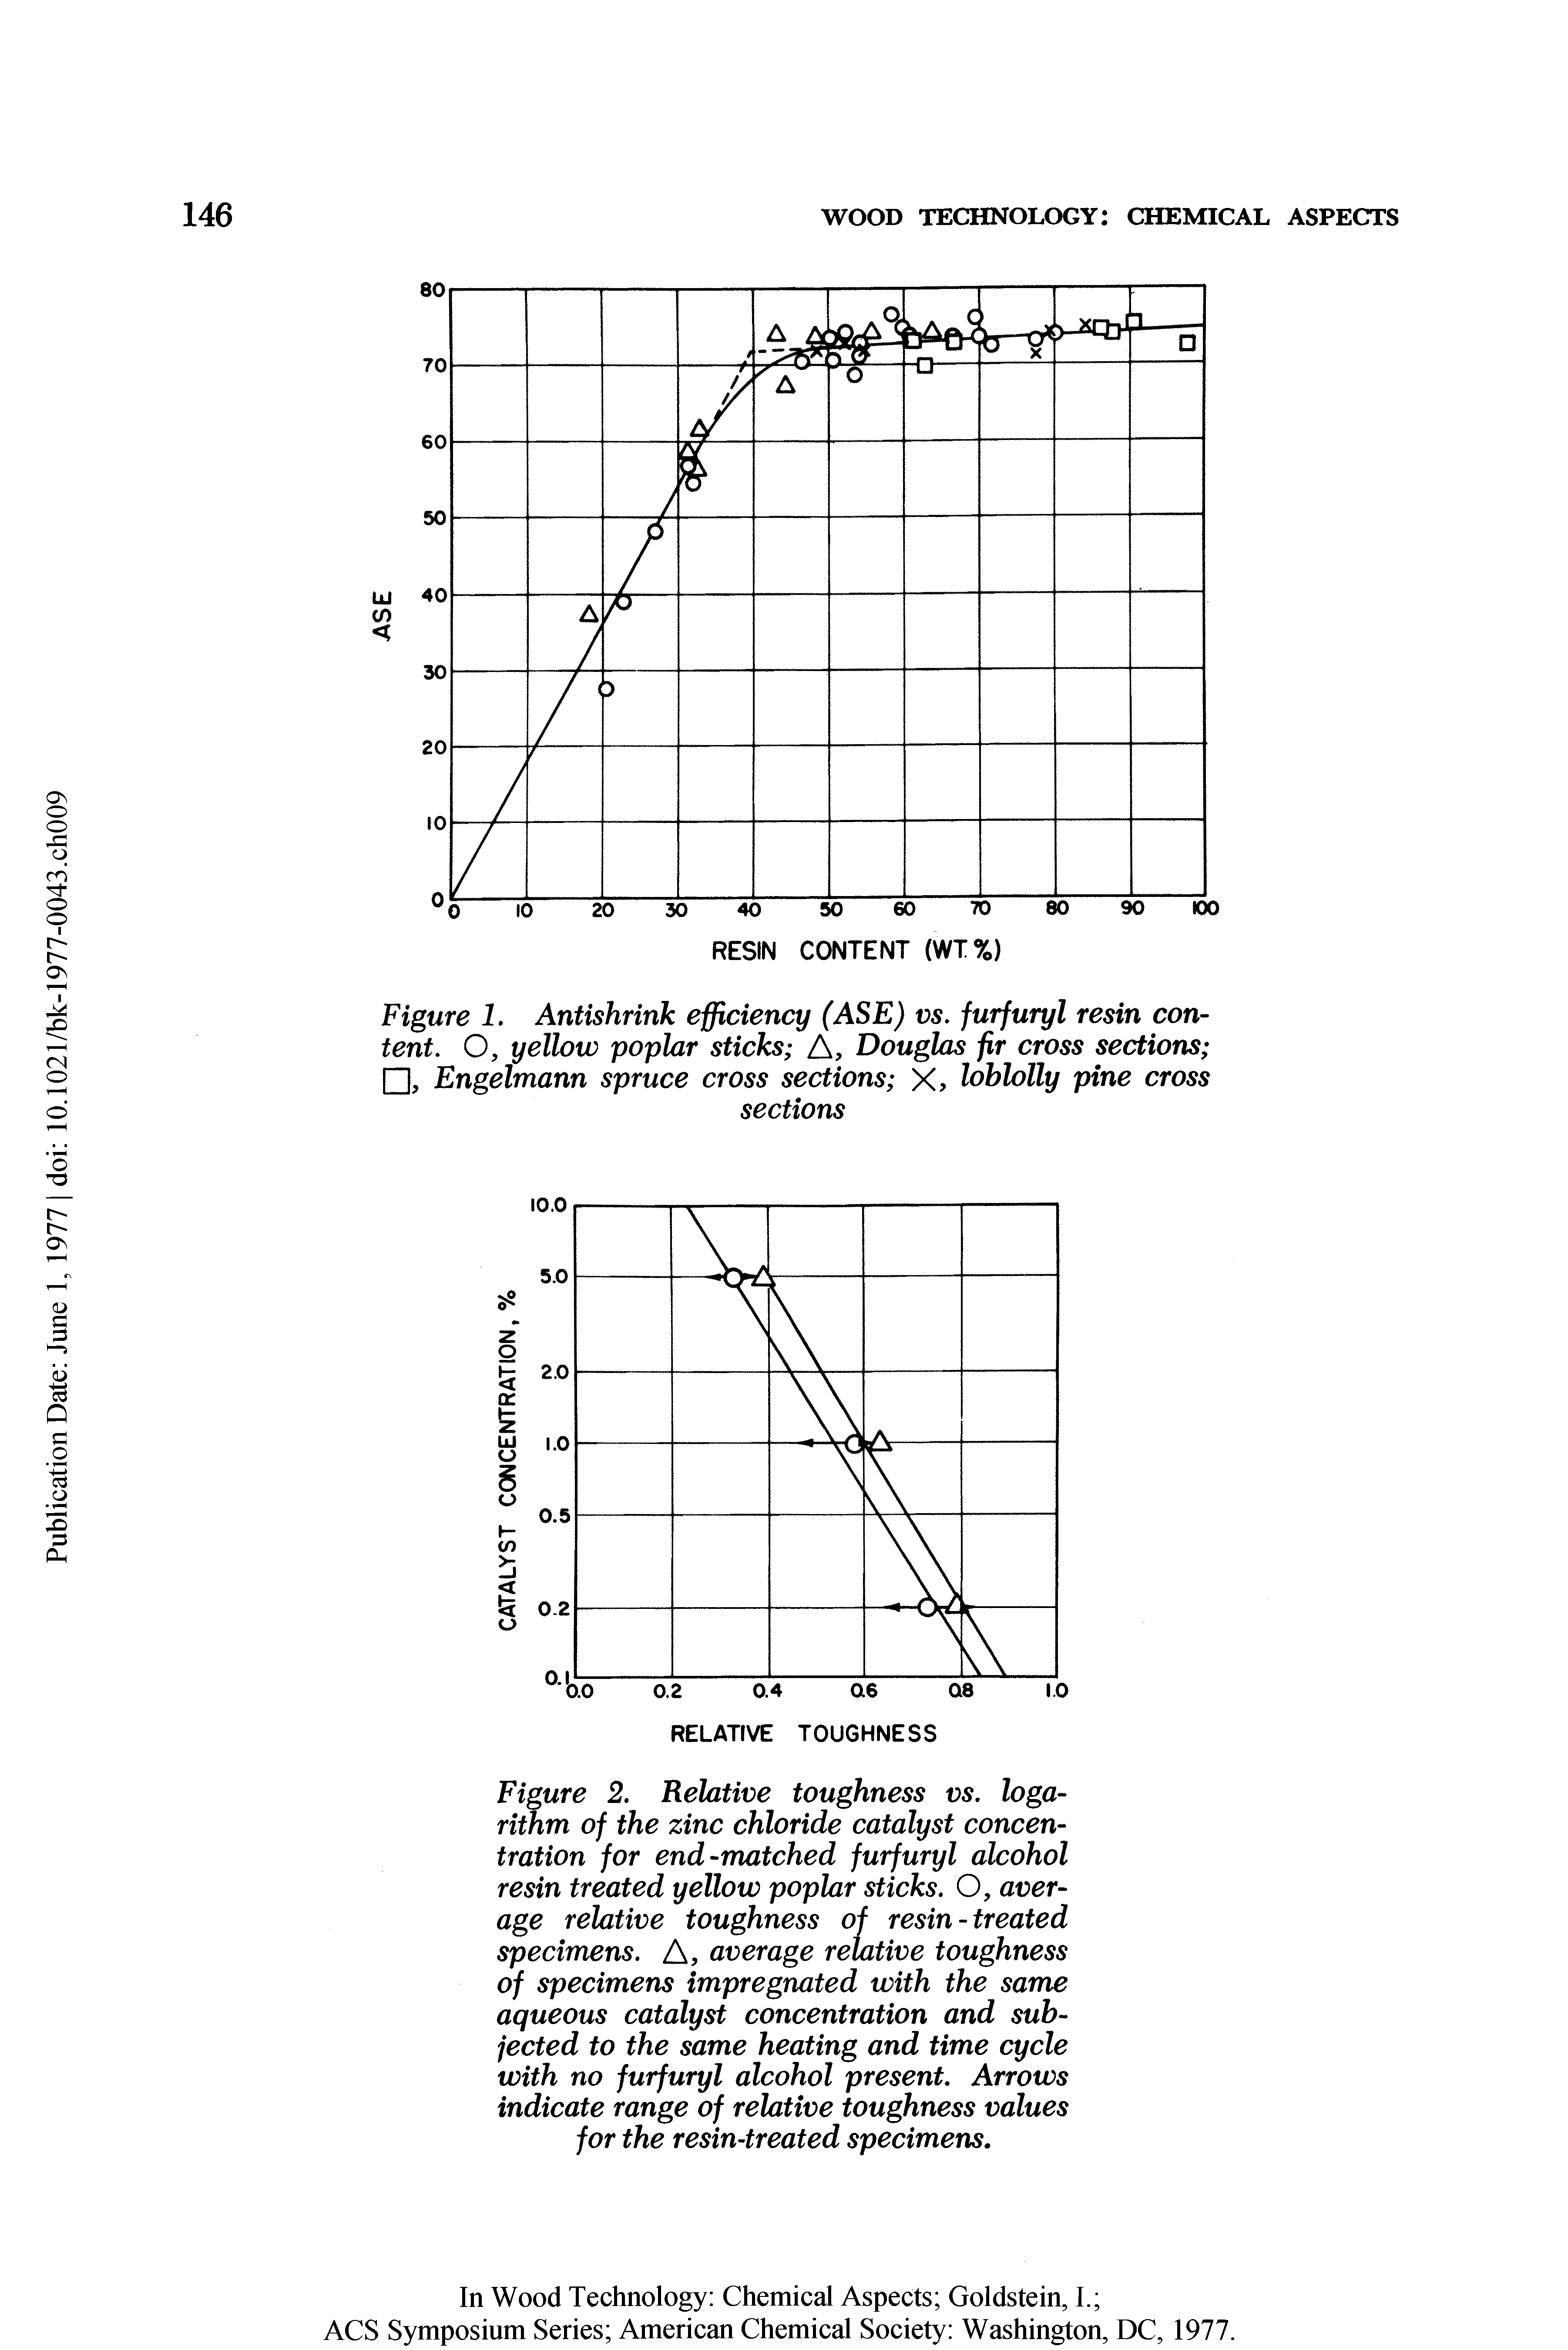 Figure 1. Antishrink efficiency (ASE) vs. furfuryl resin content. O, yellow poplar sticks A, Douglas fir cross sections , Engelmann spruce cross sections X, loblolly pine cross sections...